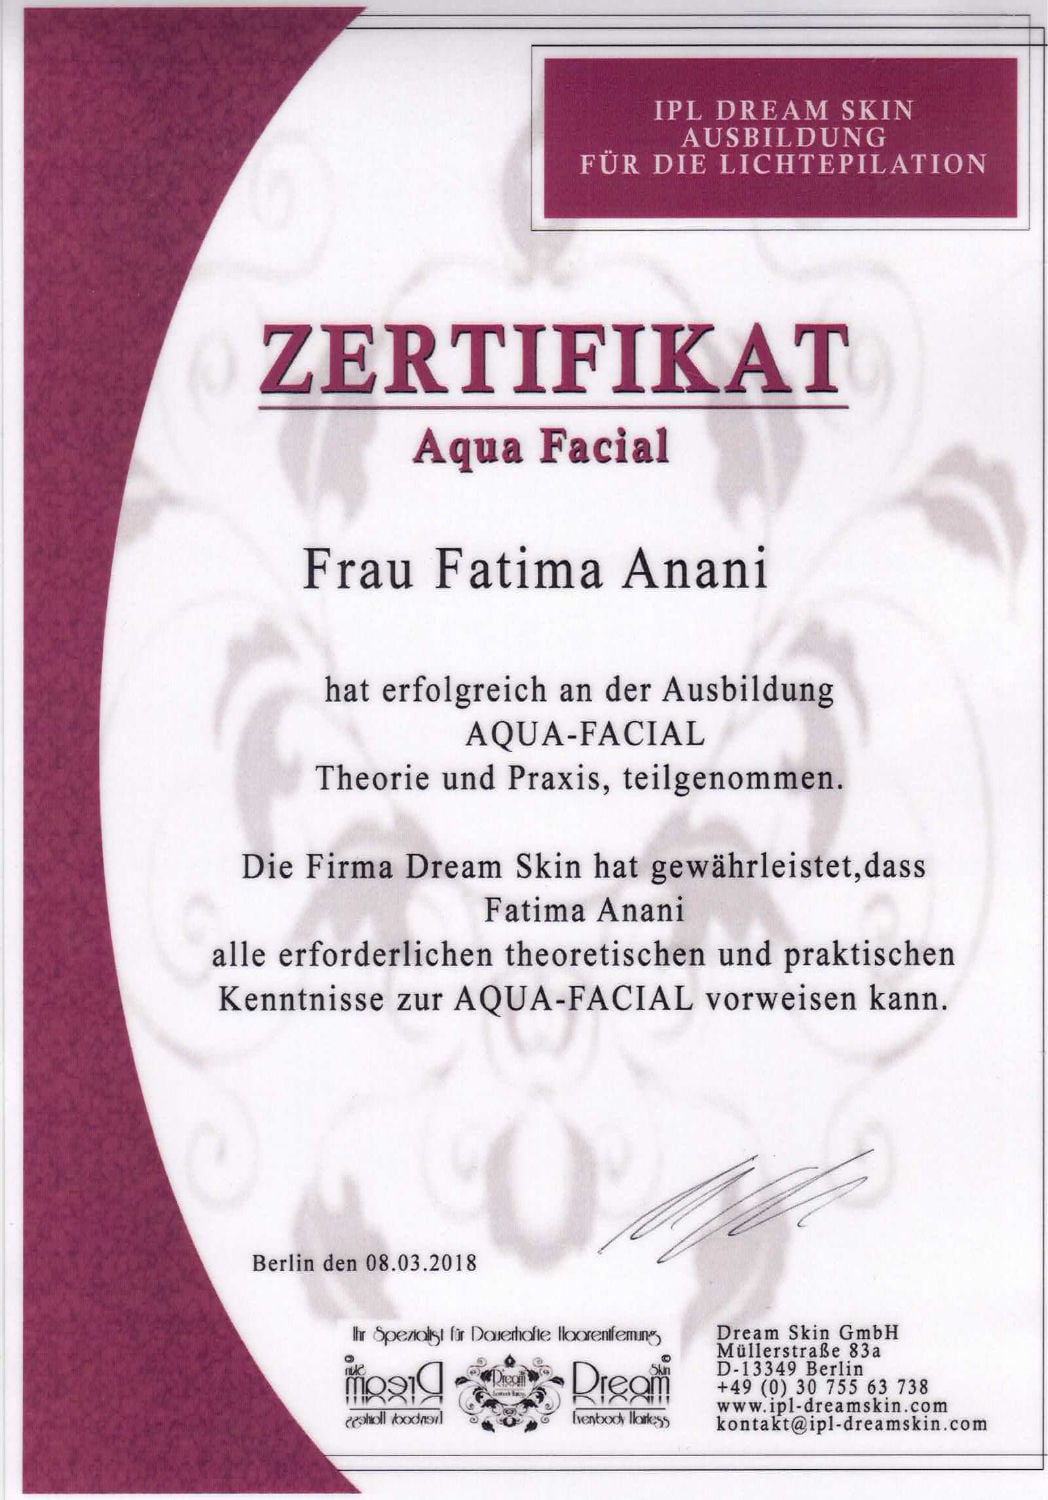 Zertifikat Aquafacial Fatima Anani von IPL Dream Skin